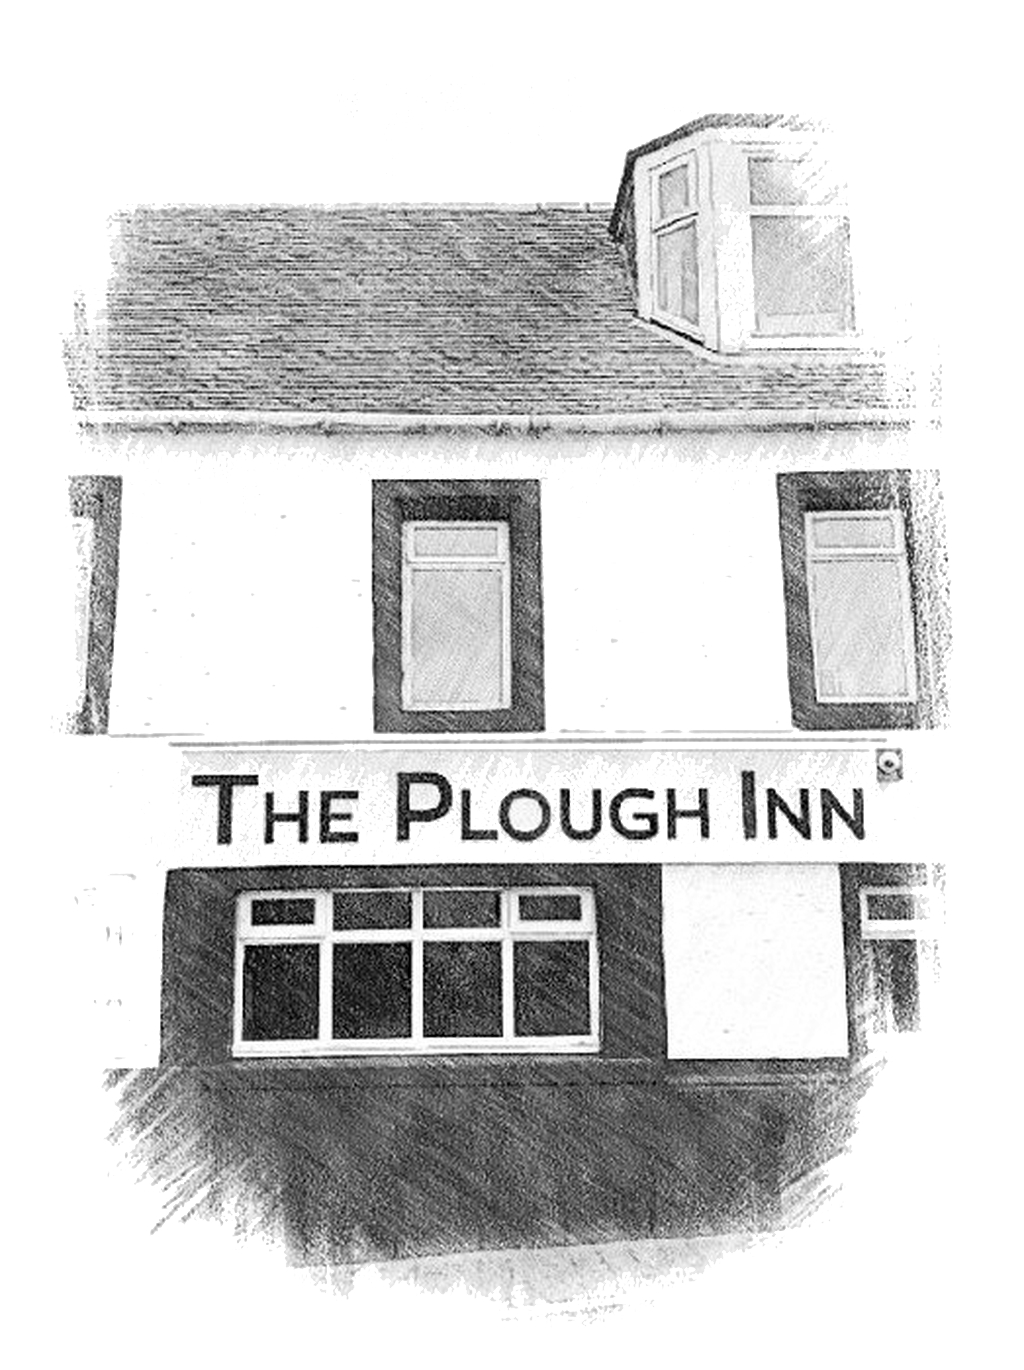 The Plough Inn - Composed by John C Grant (https://johncgrant.com). Traditional composer from Kilmarnock, Ayrshire, Scotland.